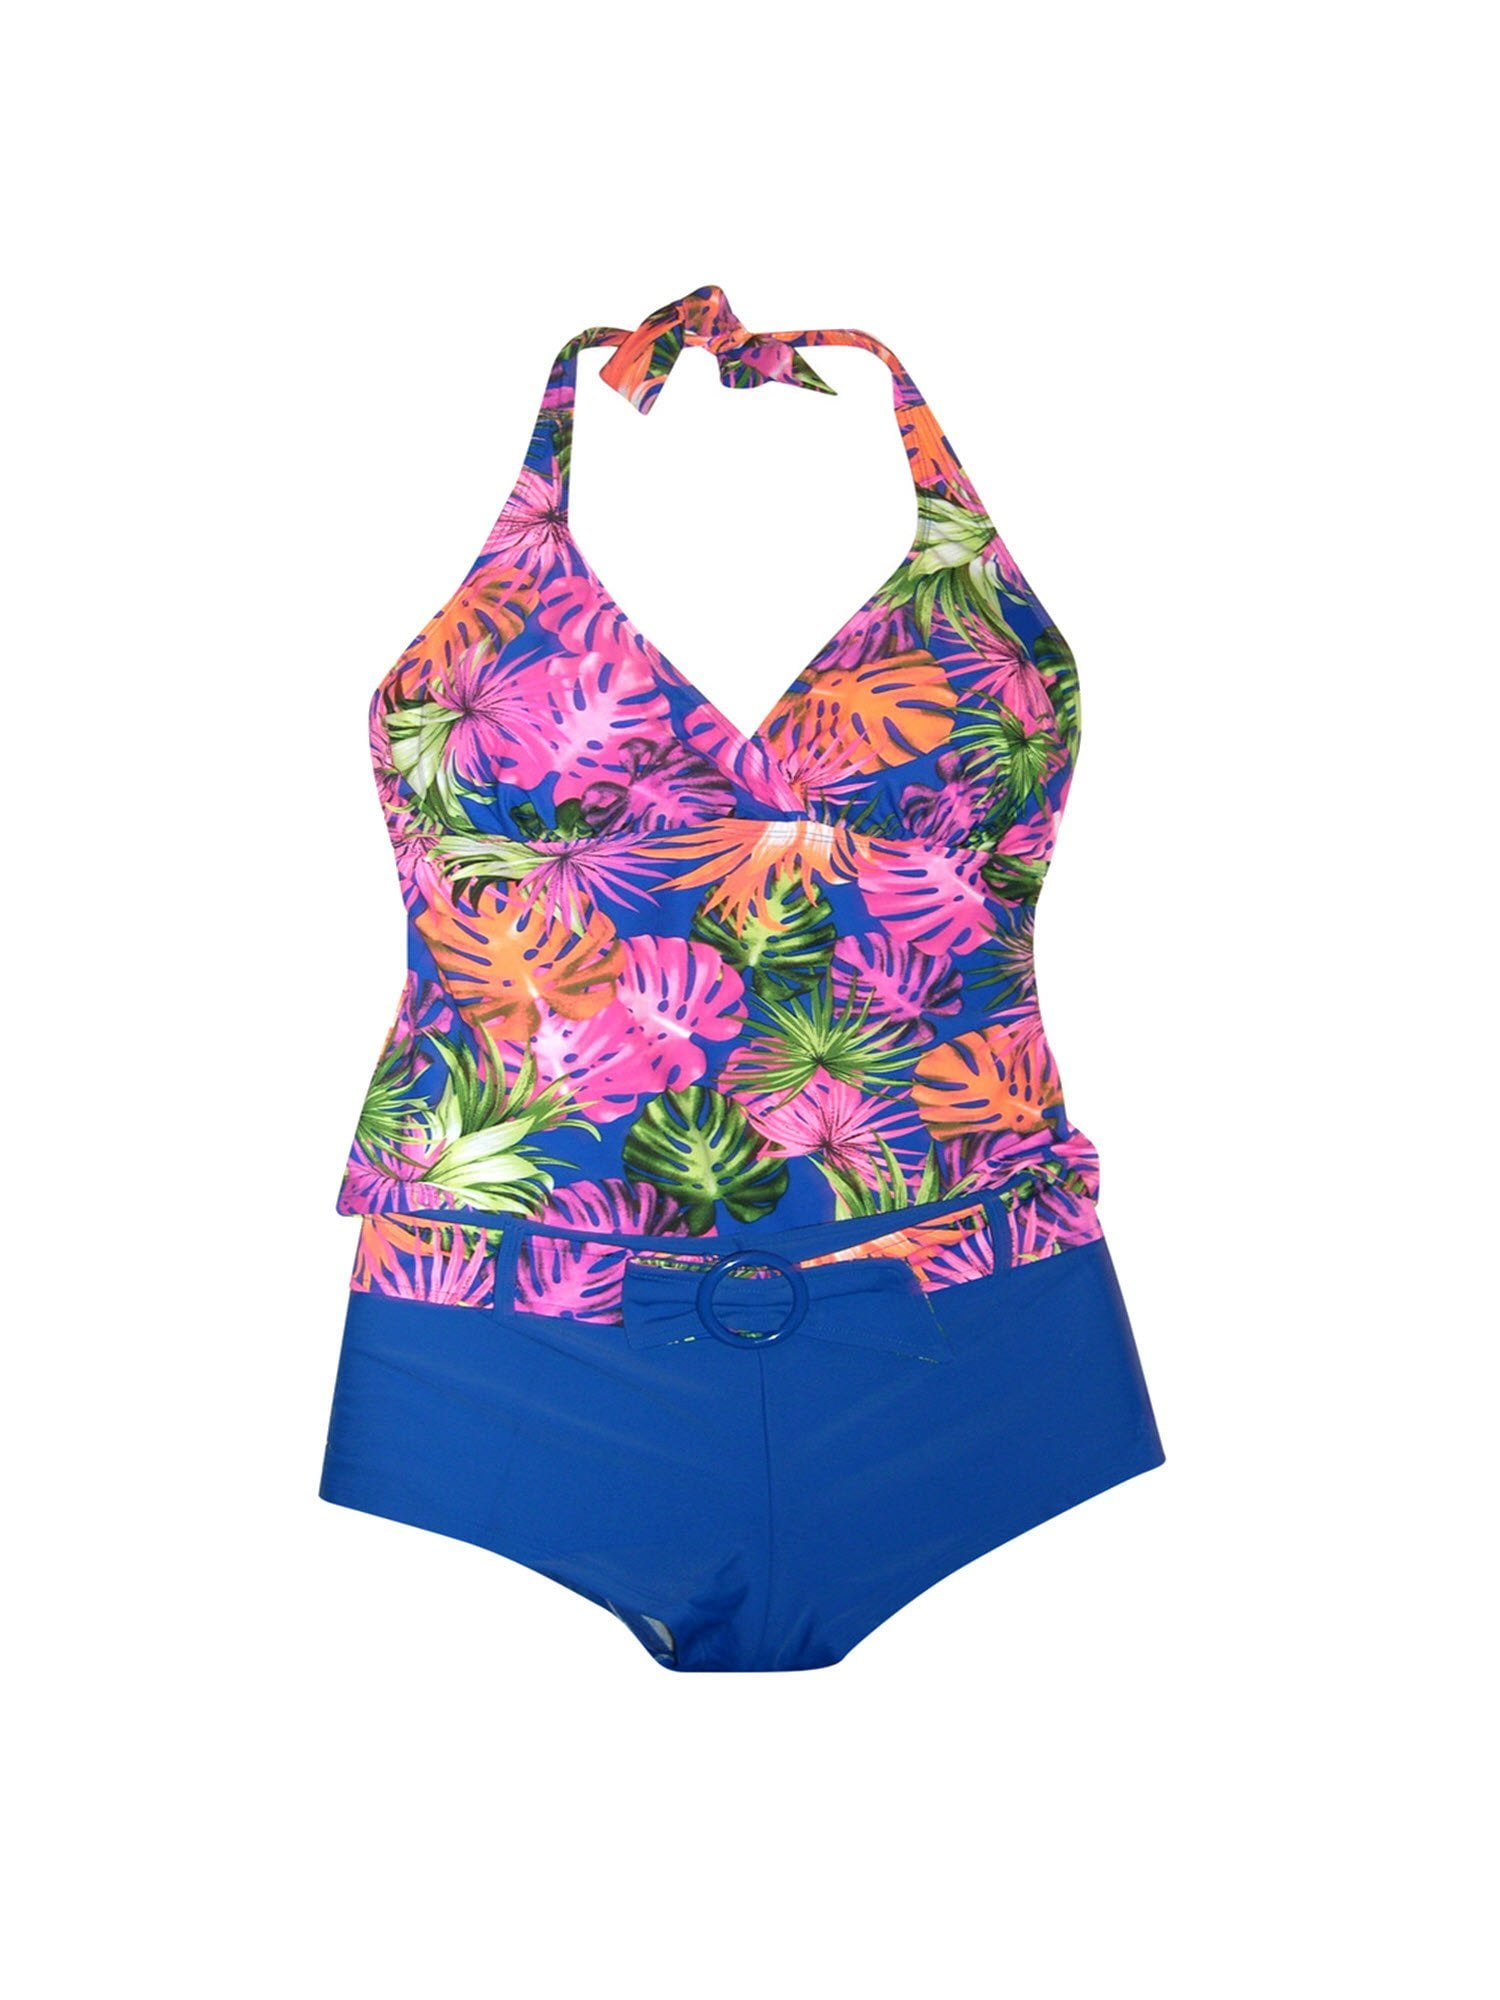 Marina West Women's Tankini Boyshorts Swimsuit Set - Walmart.com